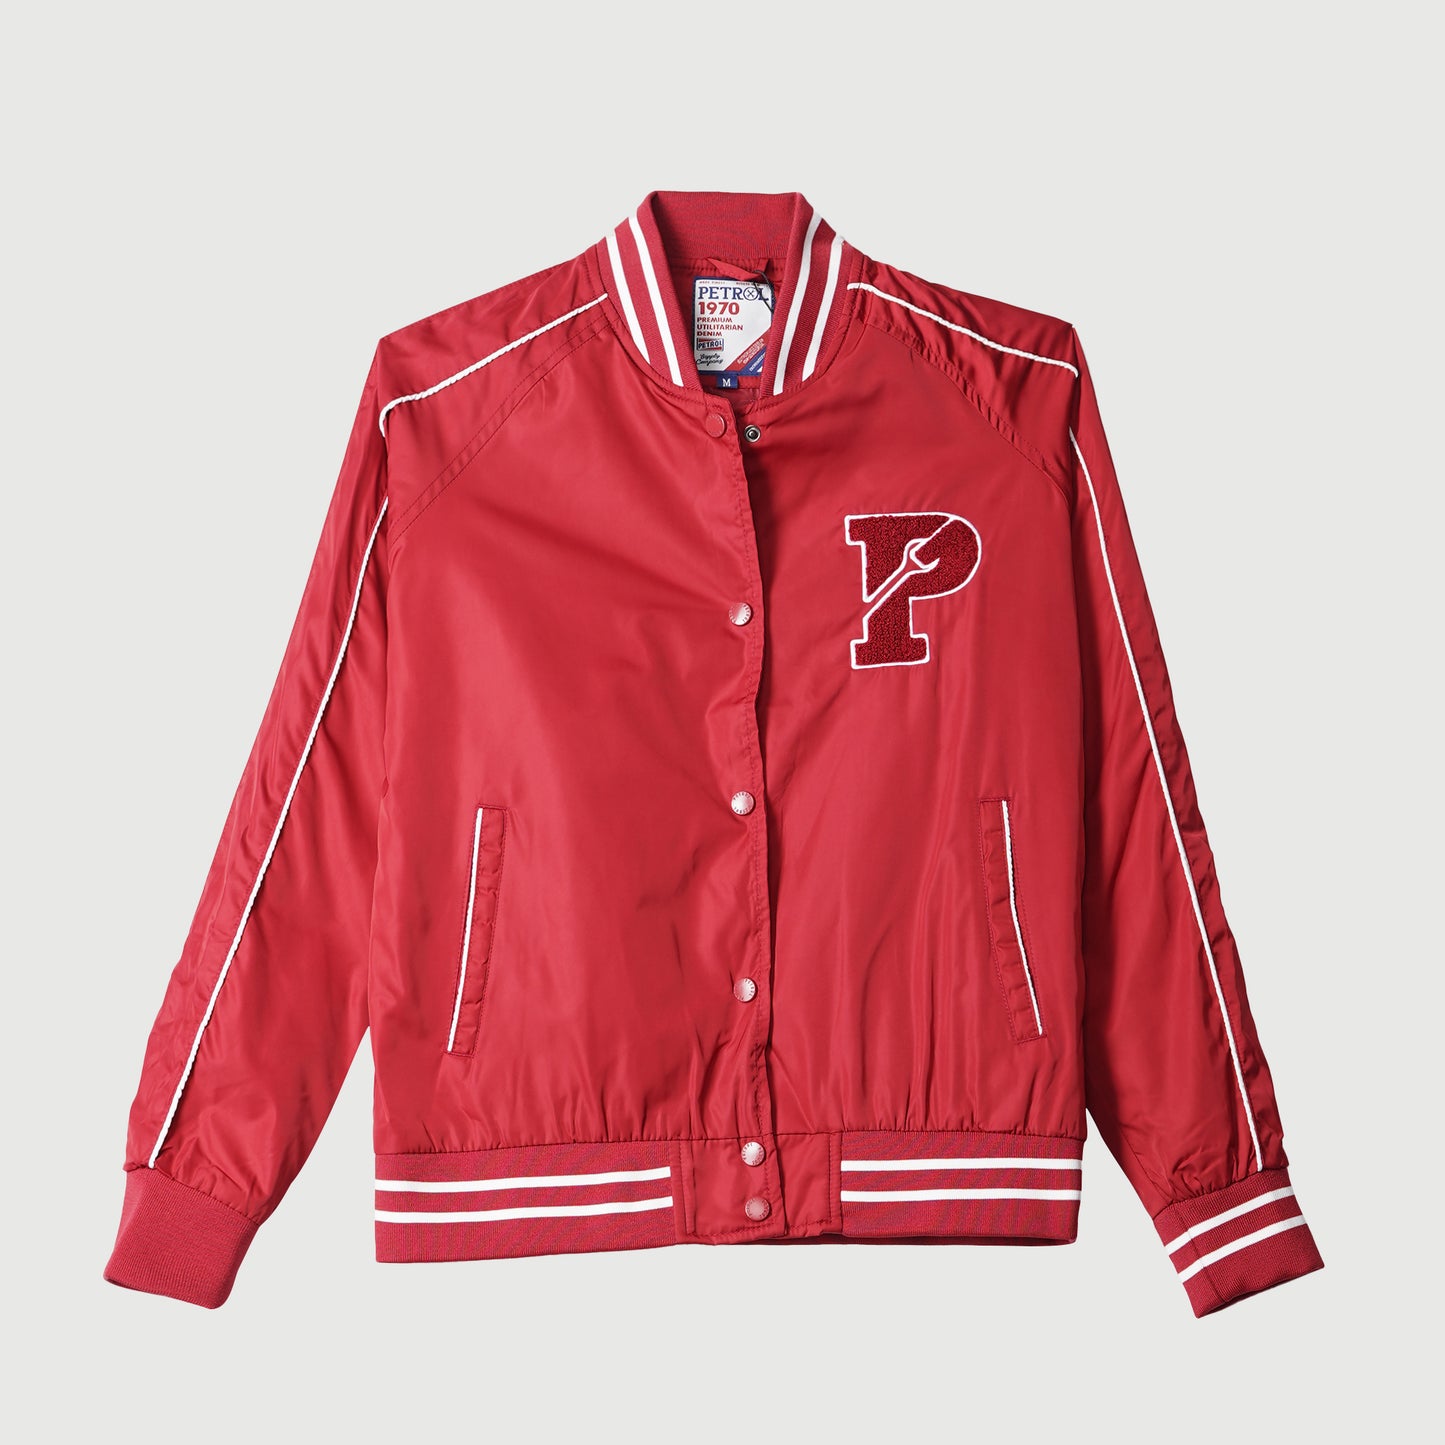 Petrol Basic Jacket for Ladies Regular Fitting Nylon Fabric Trendy fashion Casual Top Crimson Jacket for Ladies 130925 (Crimson)